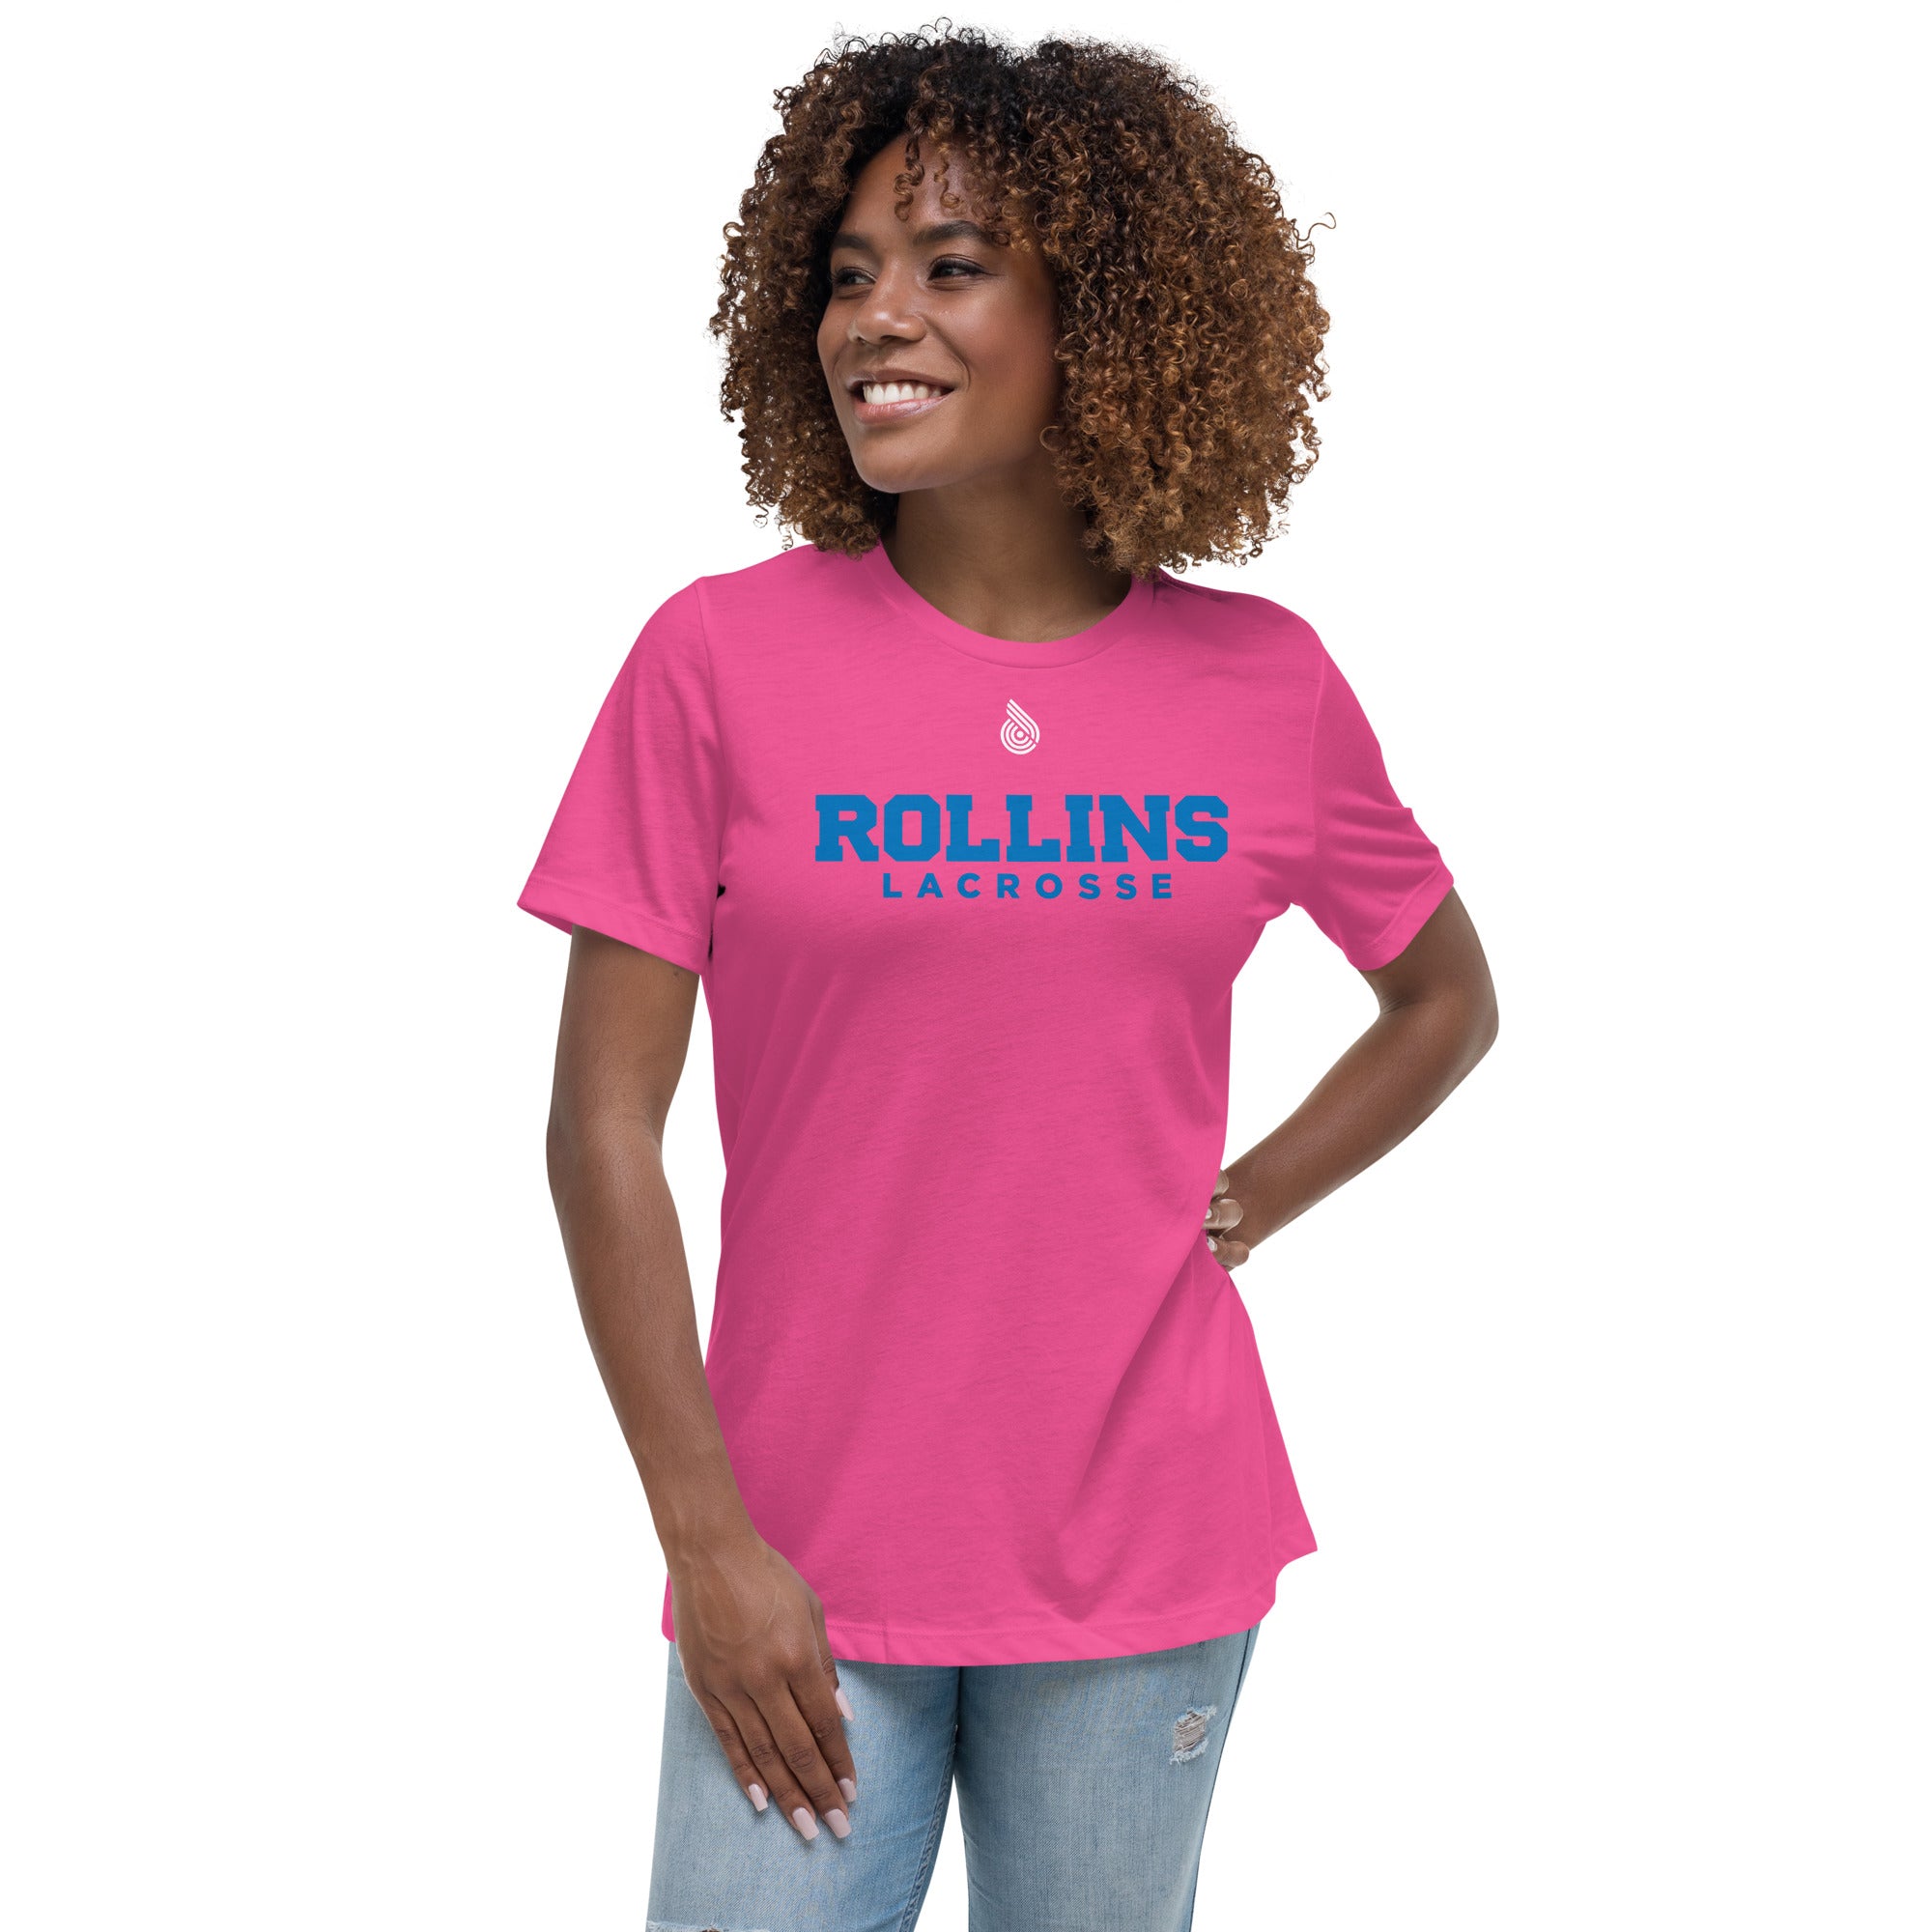 Rollins Women's T-Shirt